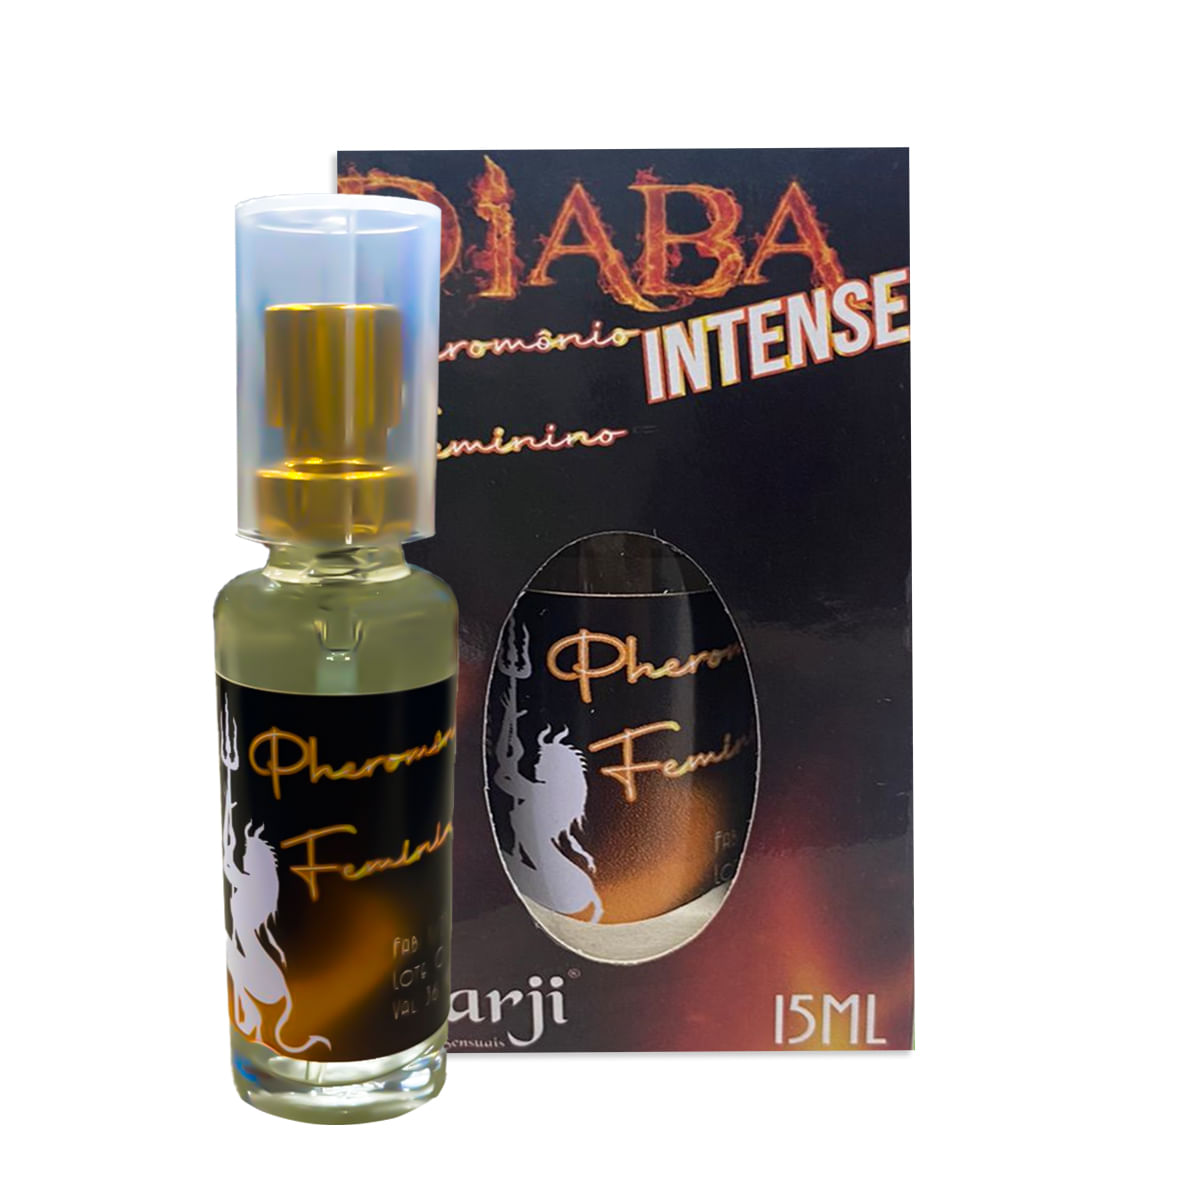 Diaba Intense Perfume Feminino 15ml Garji